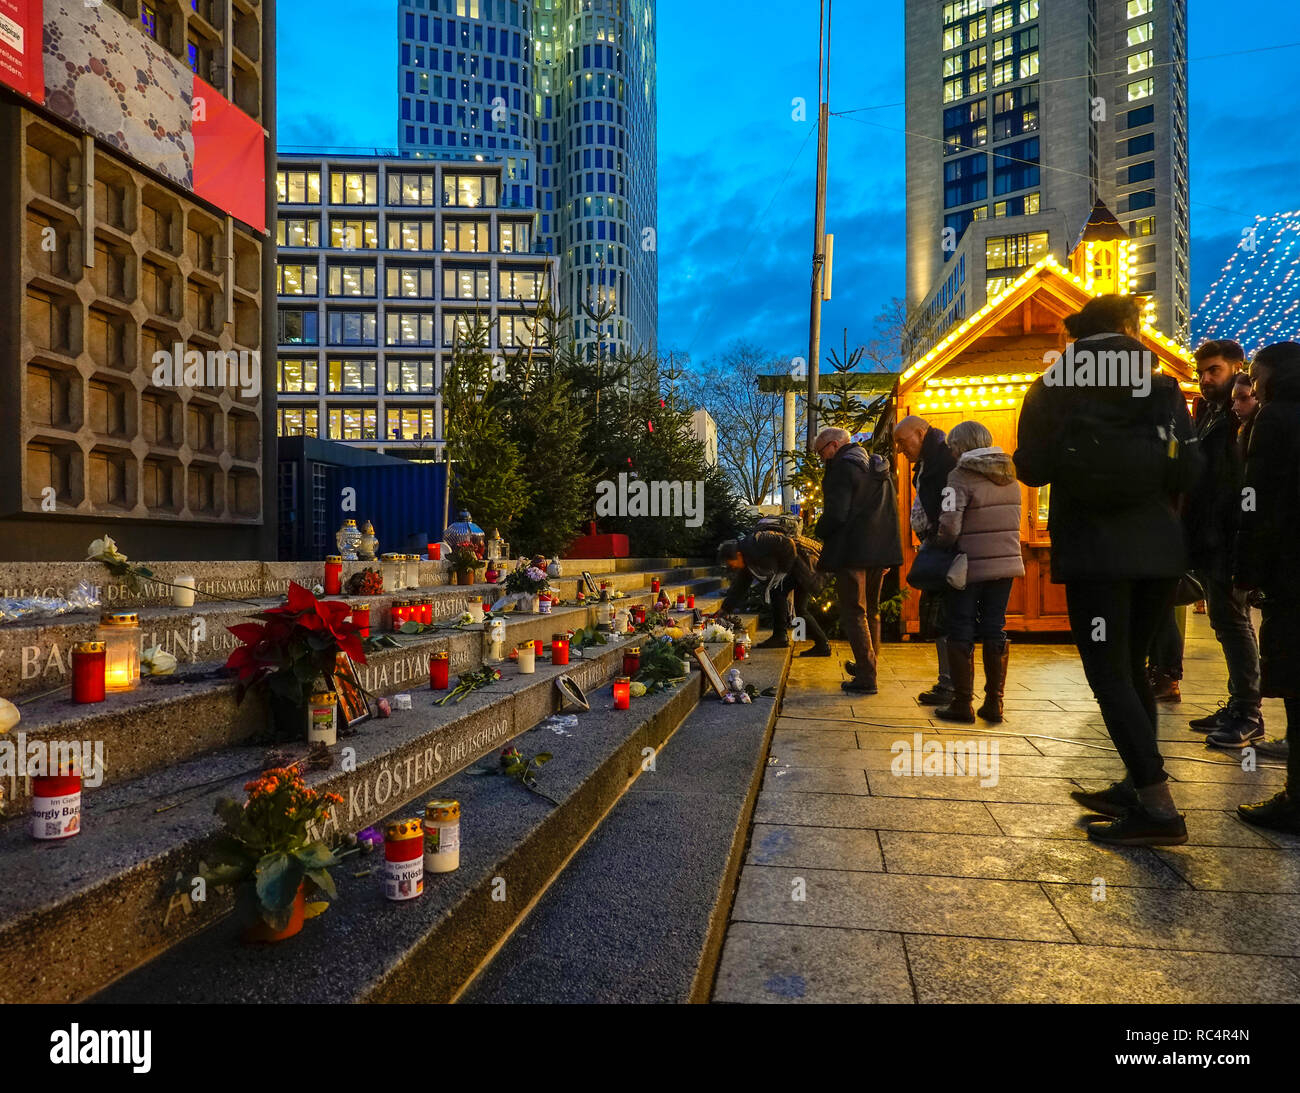 Berlin Breitscheidplatz Denkmal am Weihnachtsmarkt, Berlin City Weihnachtsmarkt, für die 12 Opfer von Terror attack 2016. Besucher Kerzen anzünden. Stockfoto